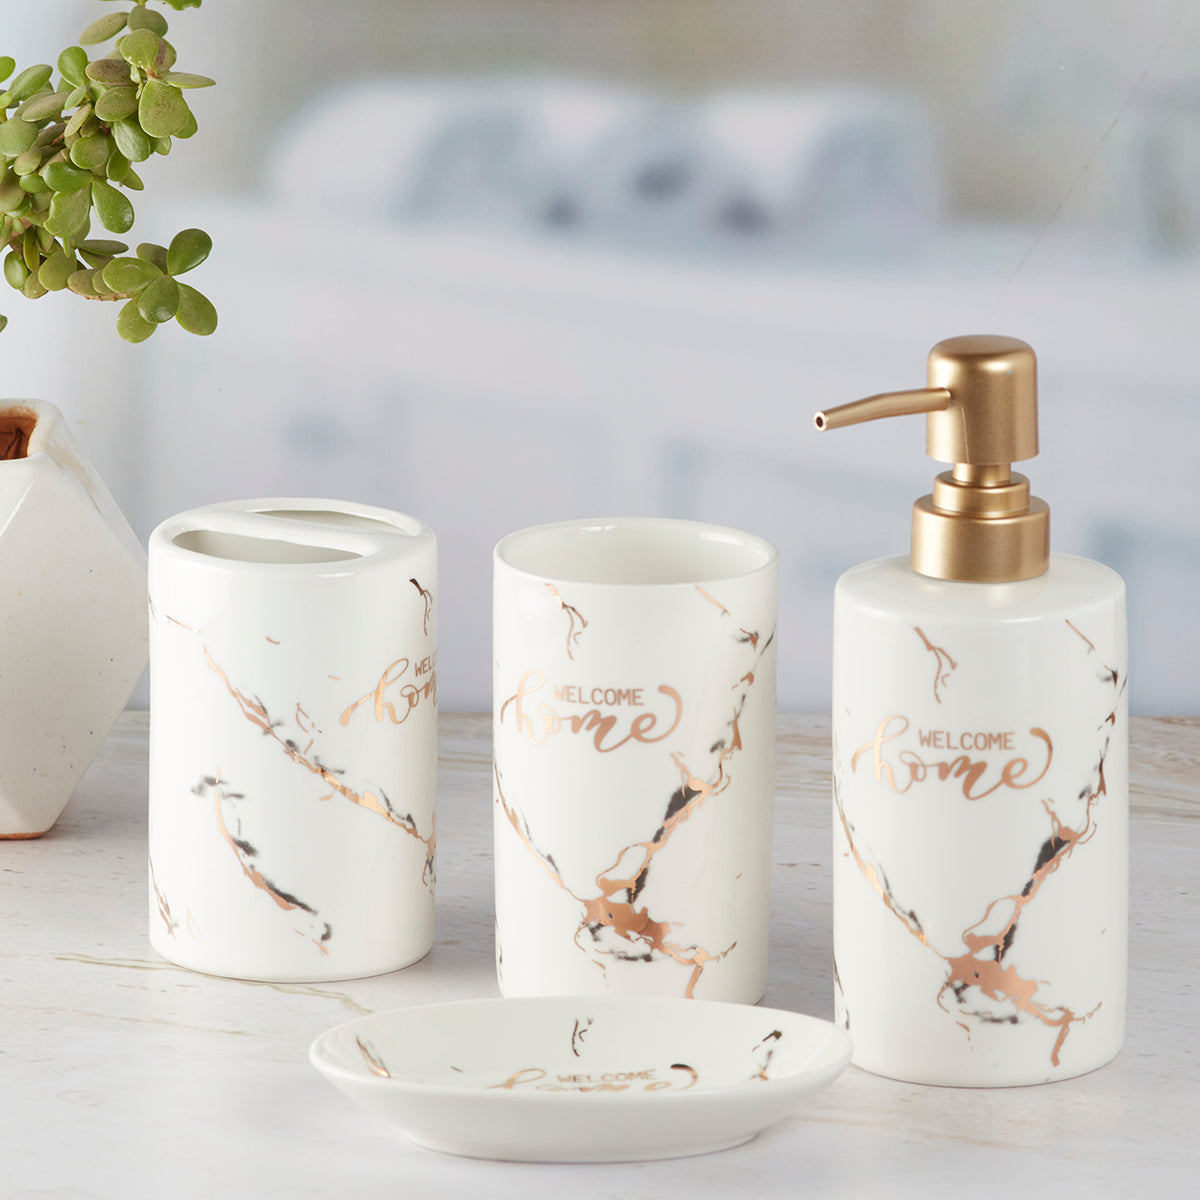 Ceramic Bathroom Accessories Set of 4 Bath Set with Soap Dispenser (9490)